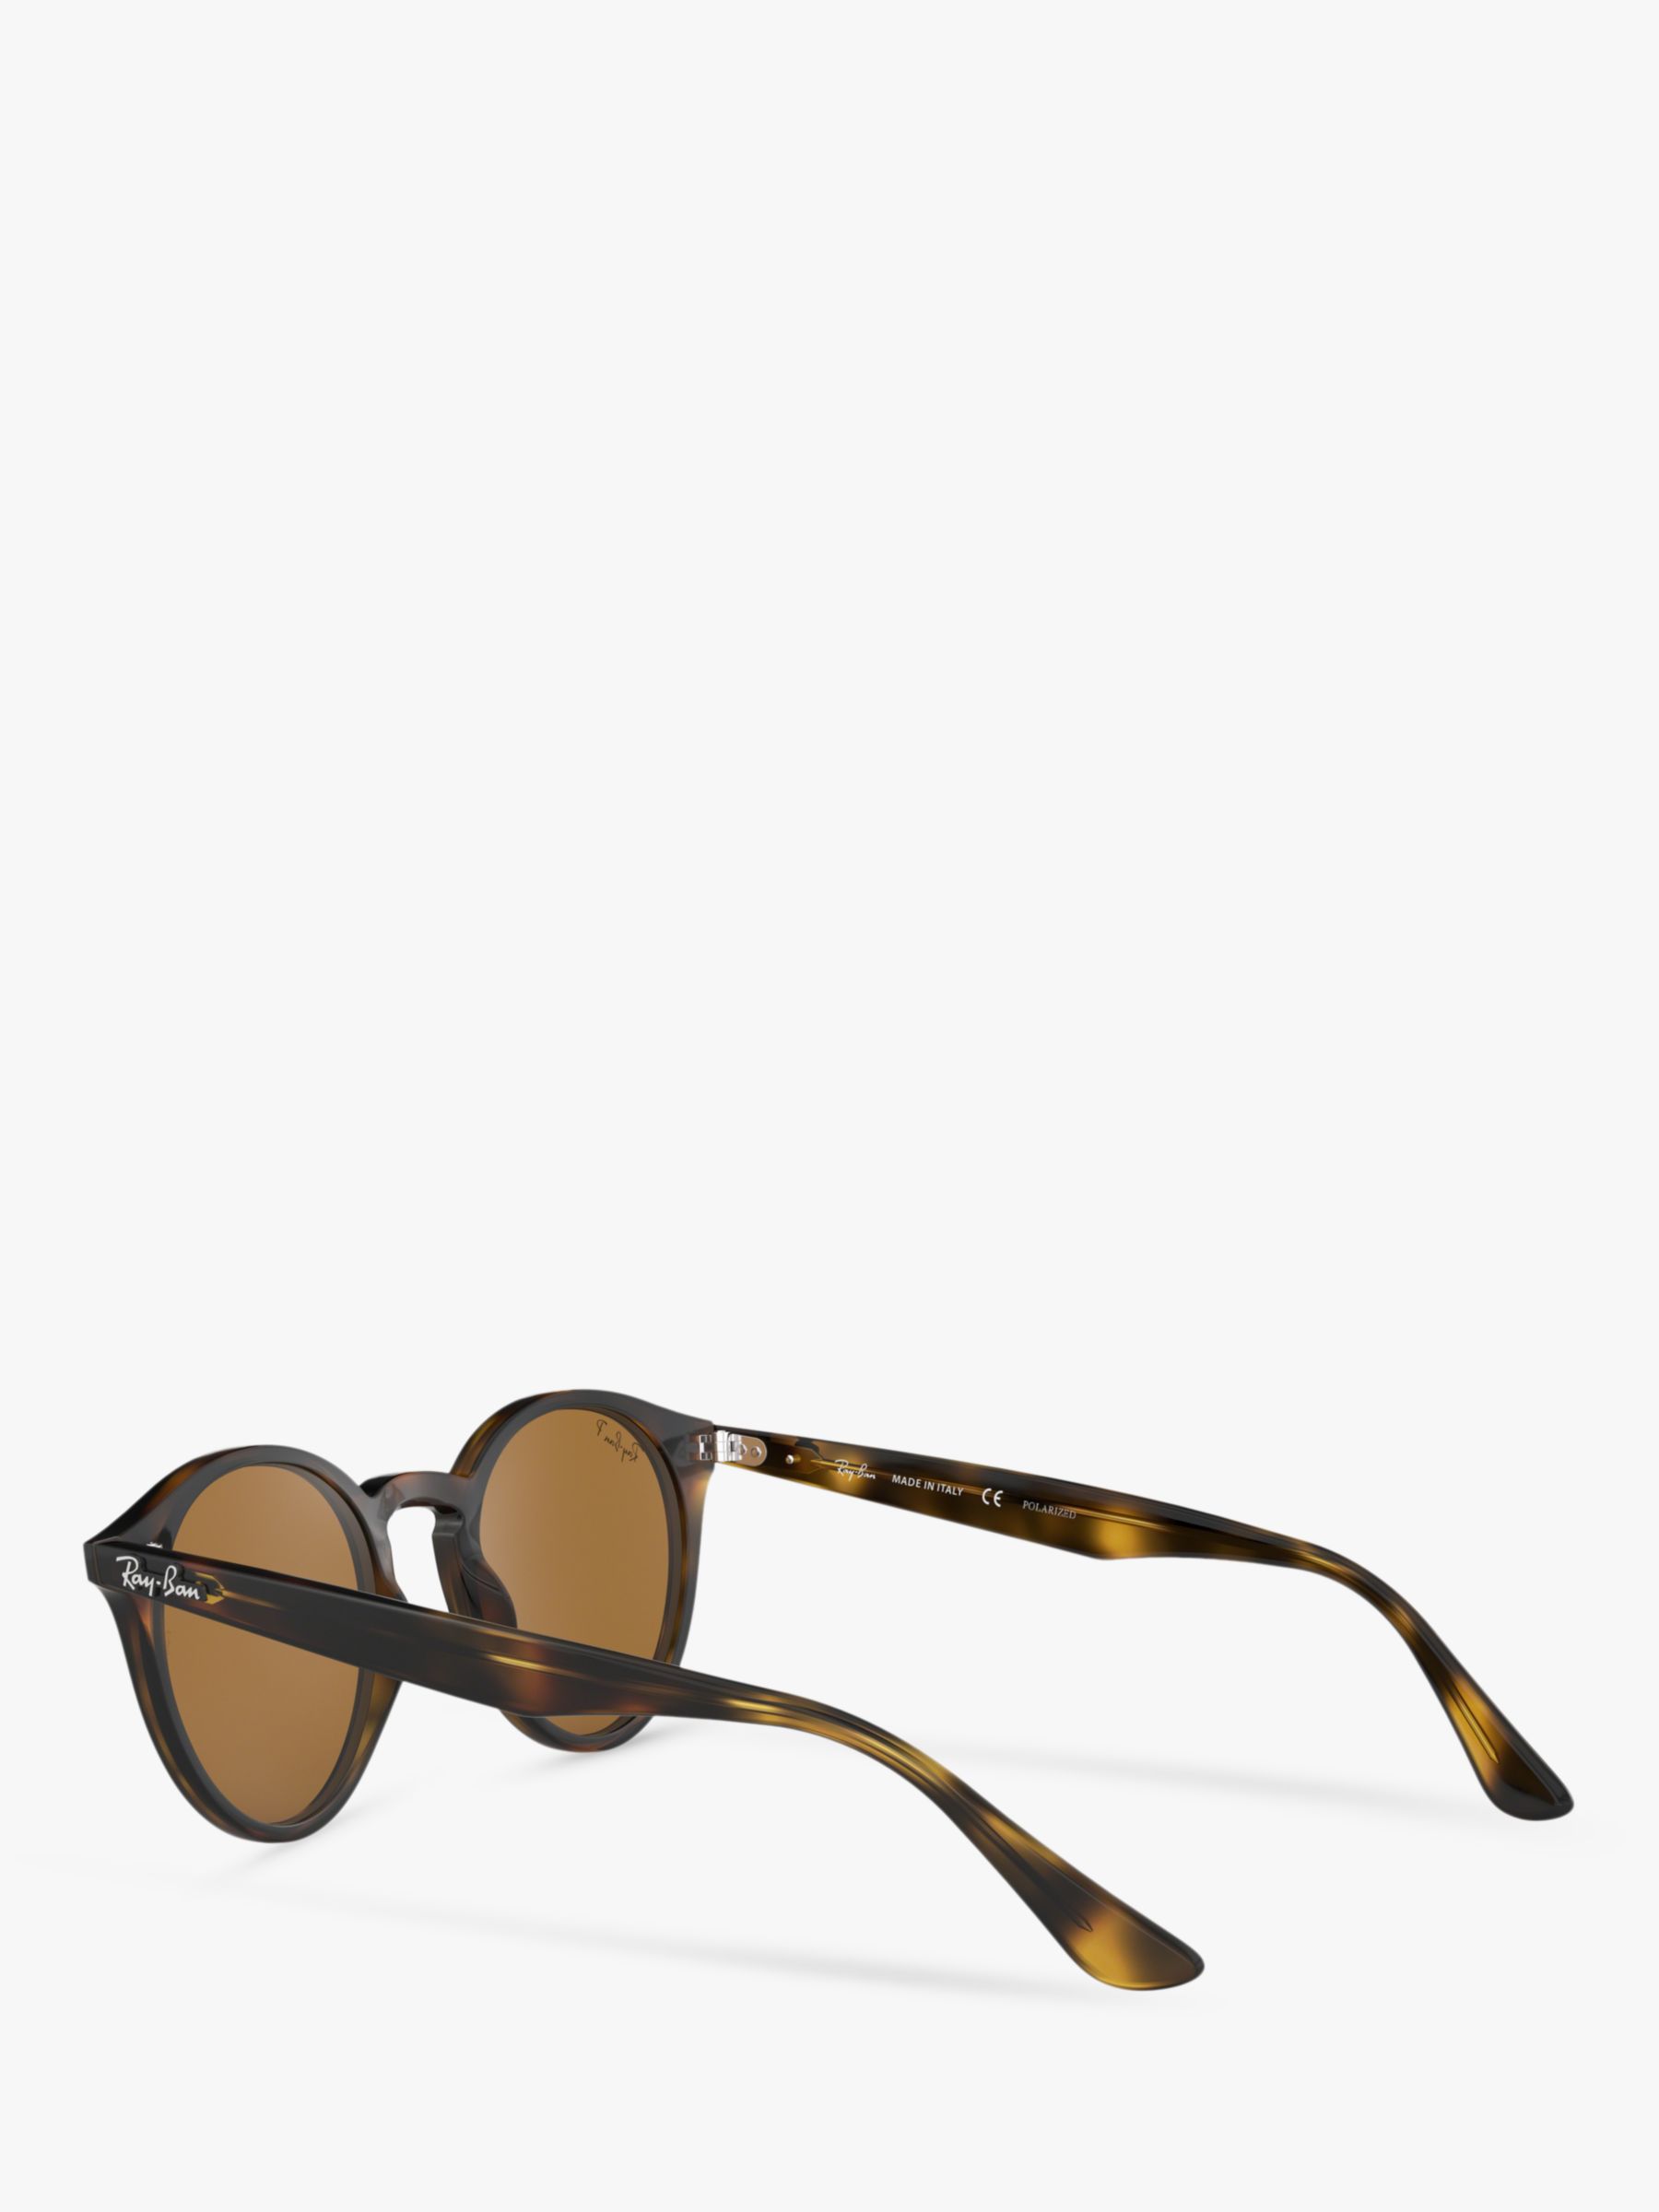 Ray-Ban RB2180 Men's Round Framed Sunglasses, Shiny Dark Havana